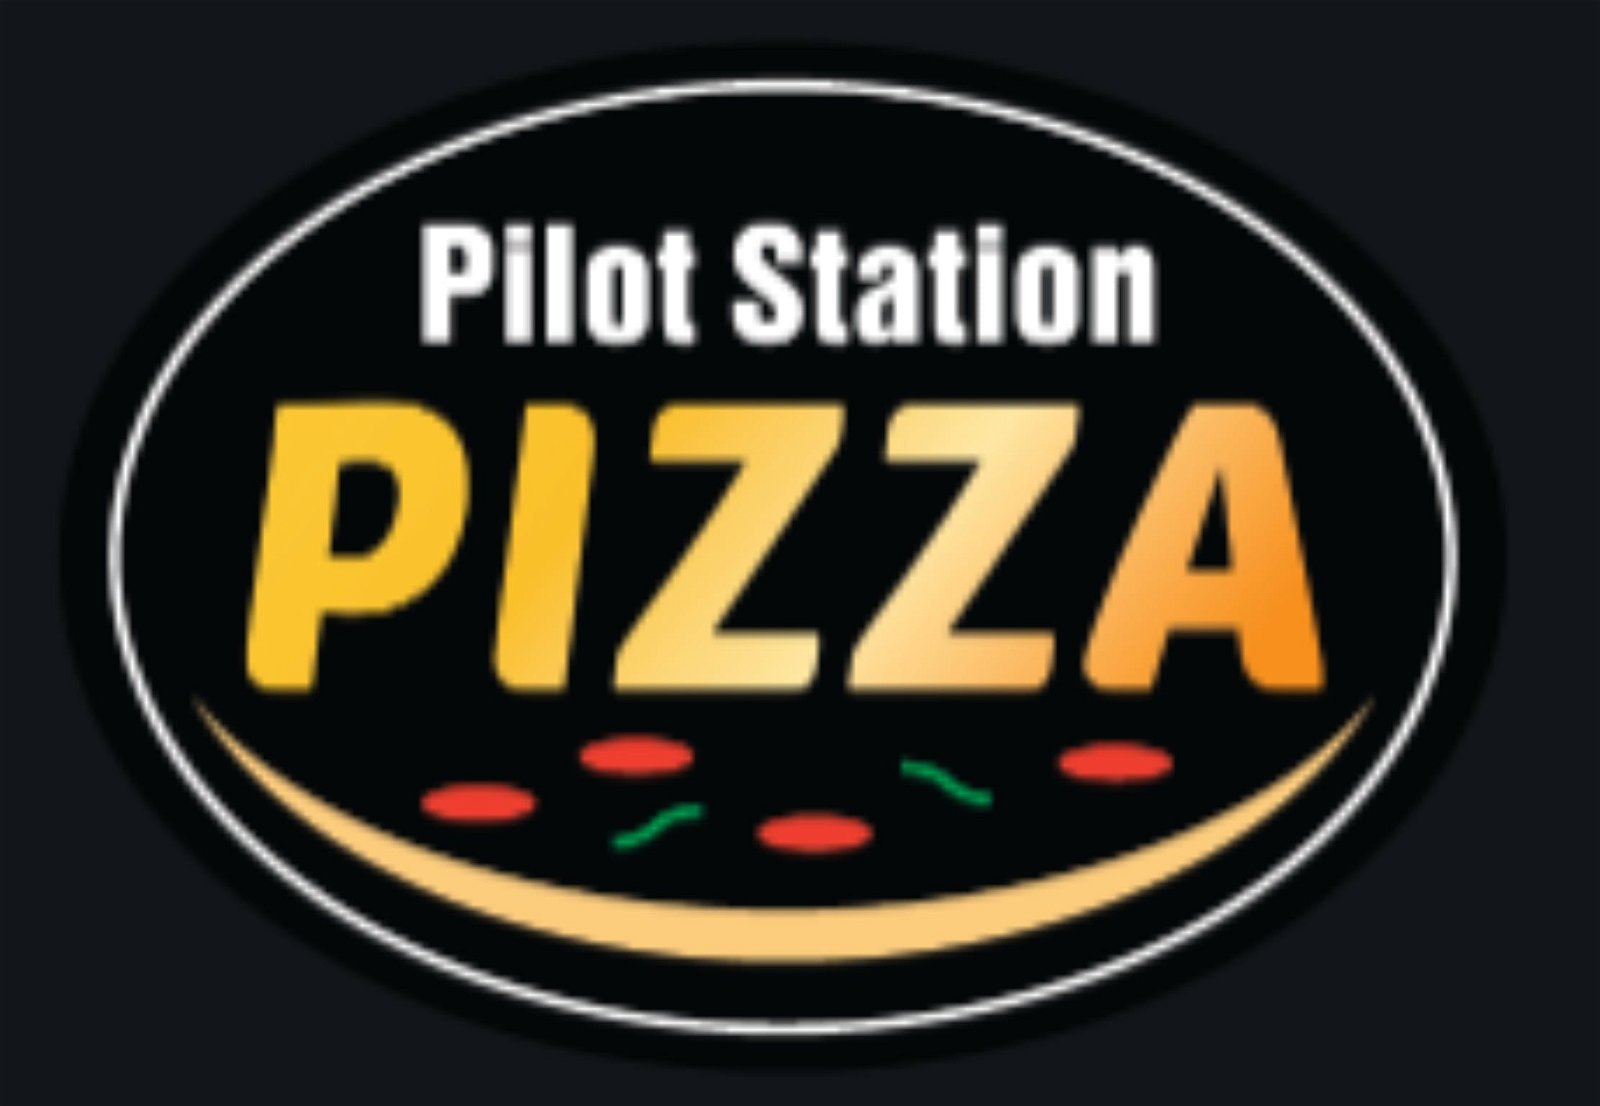 Pilot Station Pizza - Broome Tourism